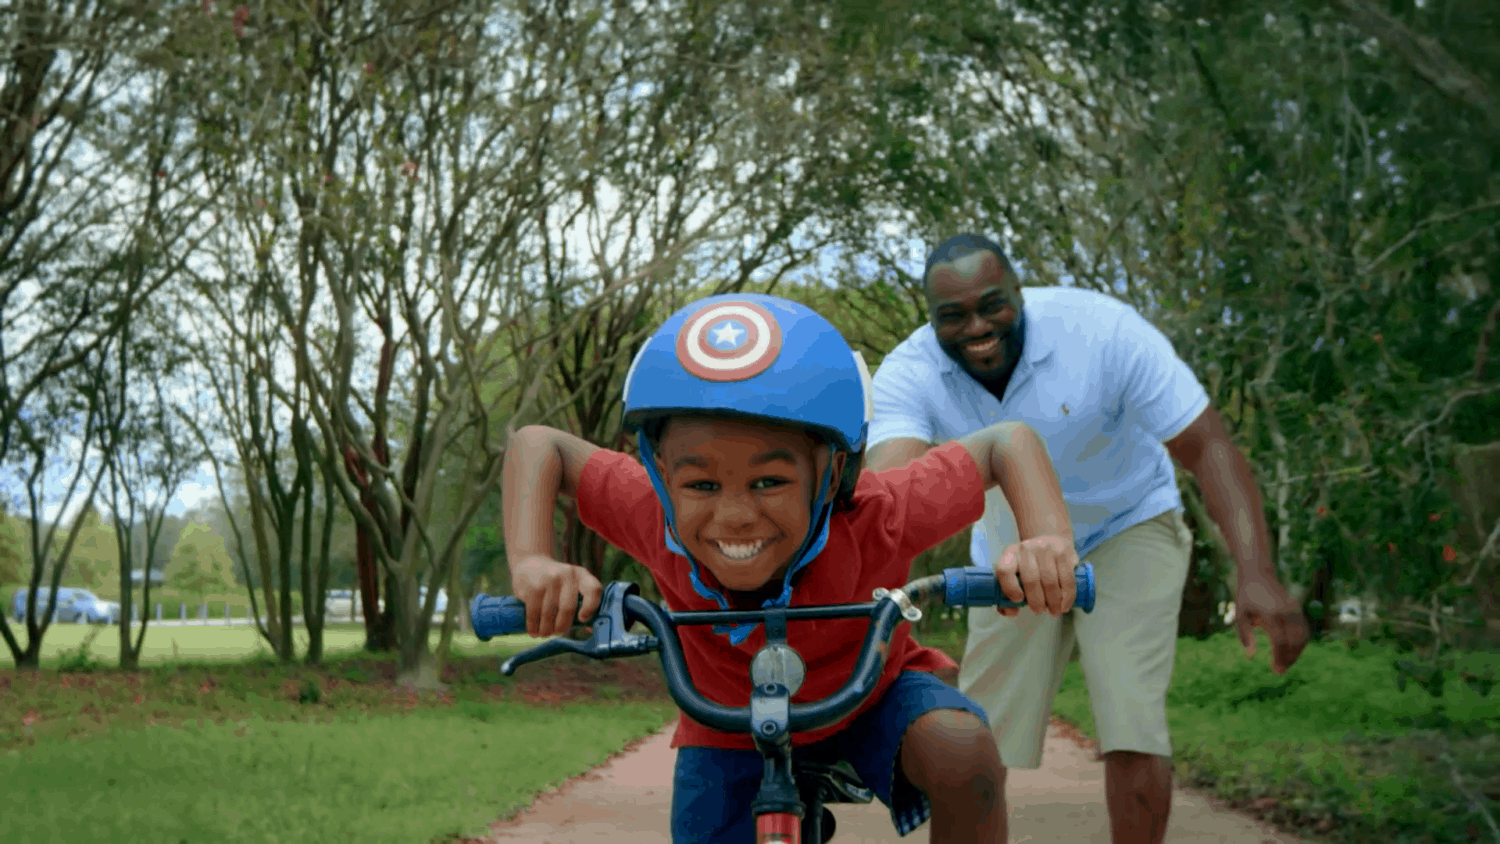 AETNA healthcare member teaches his son to ride a bike